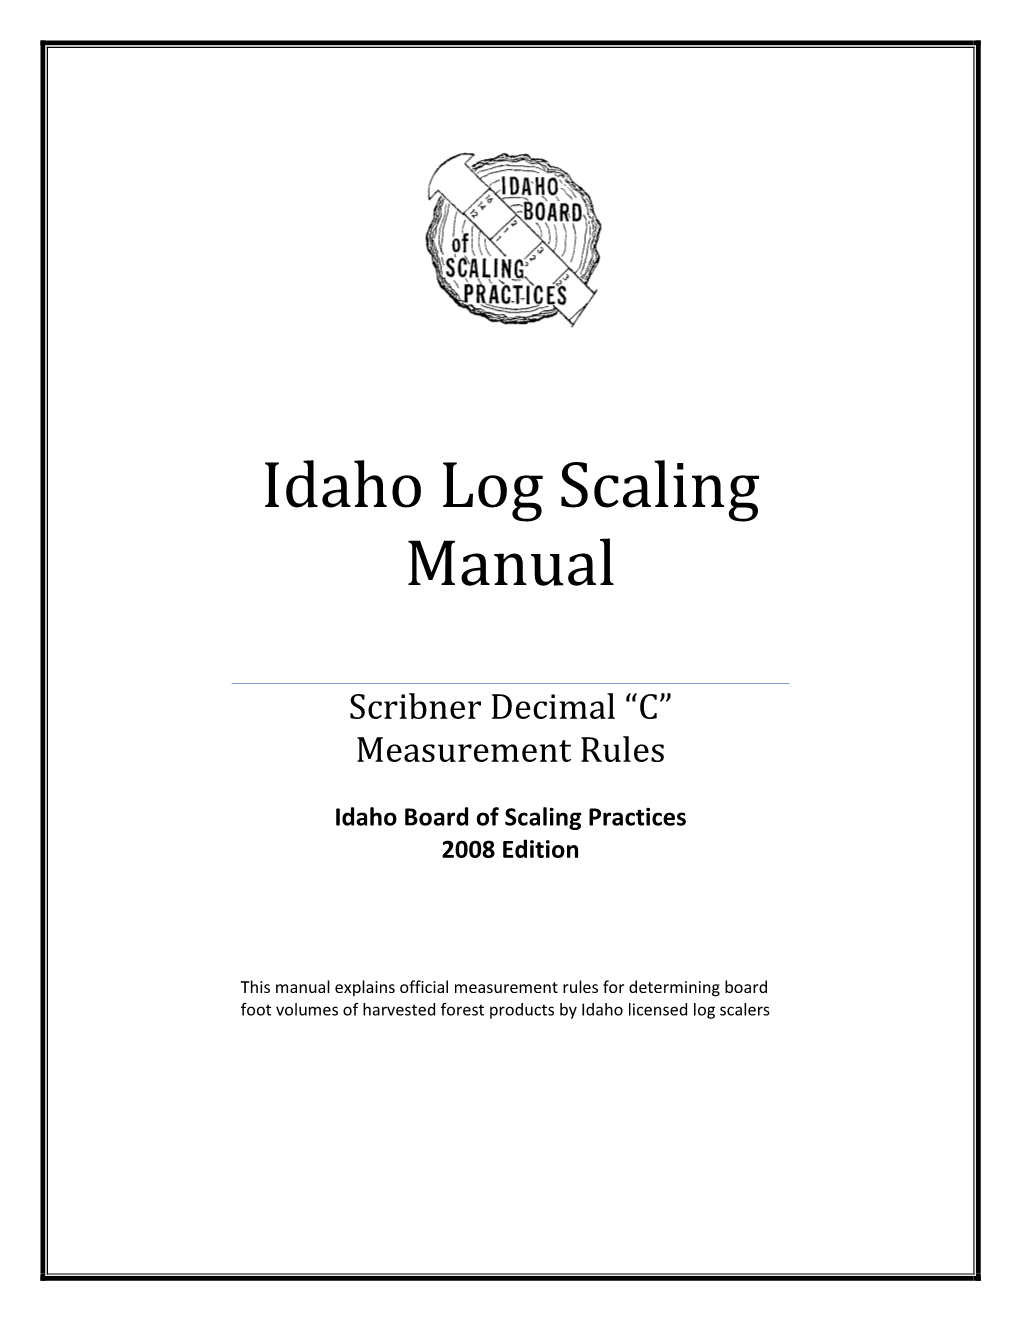 Idaho Log Scaling Manual